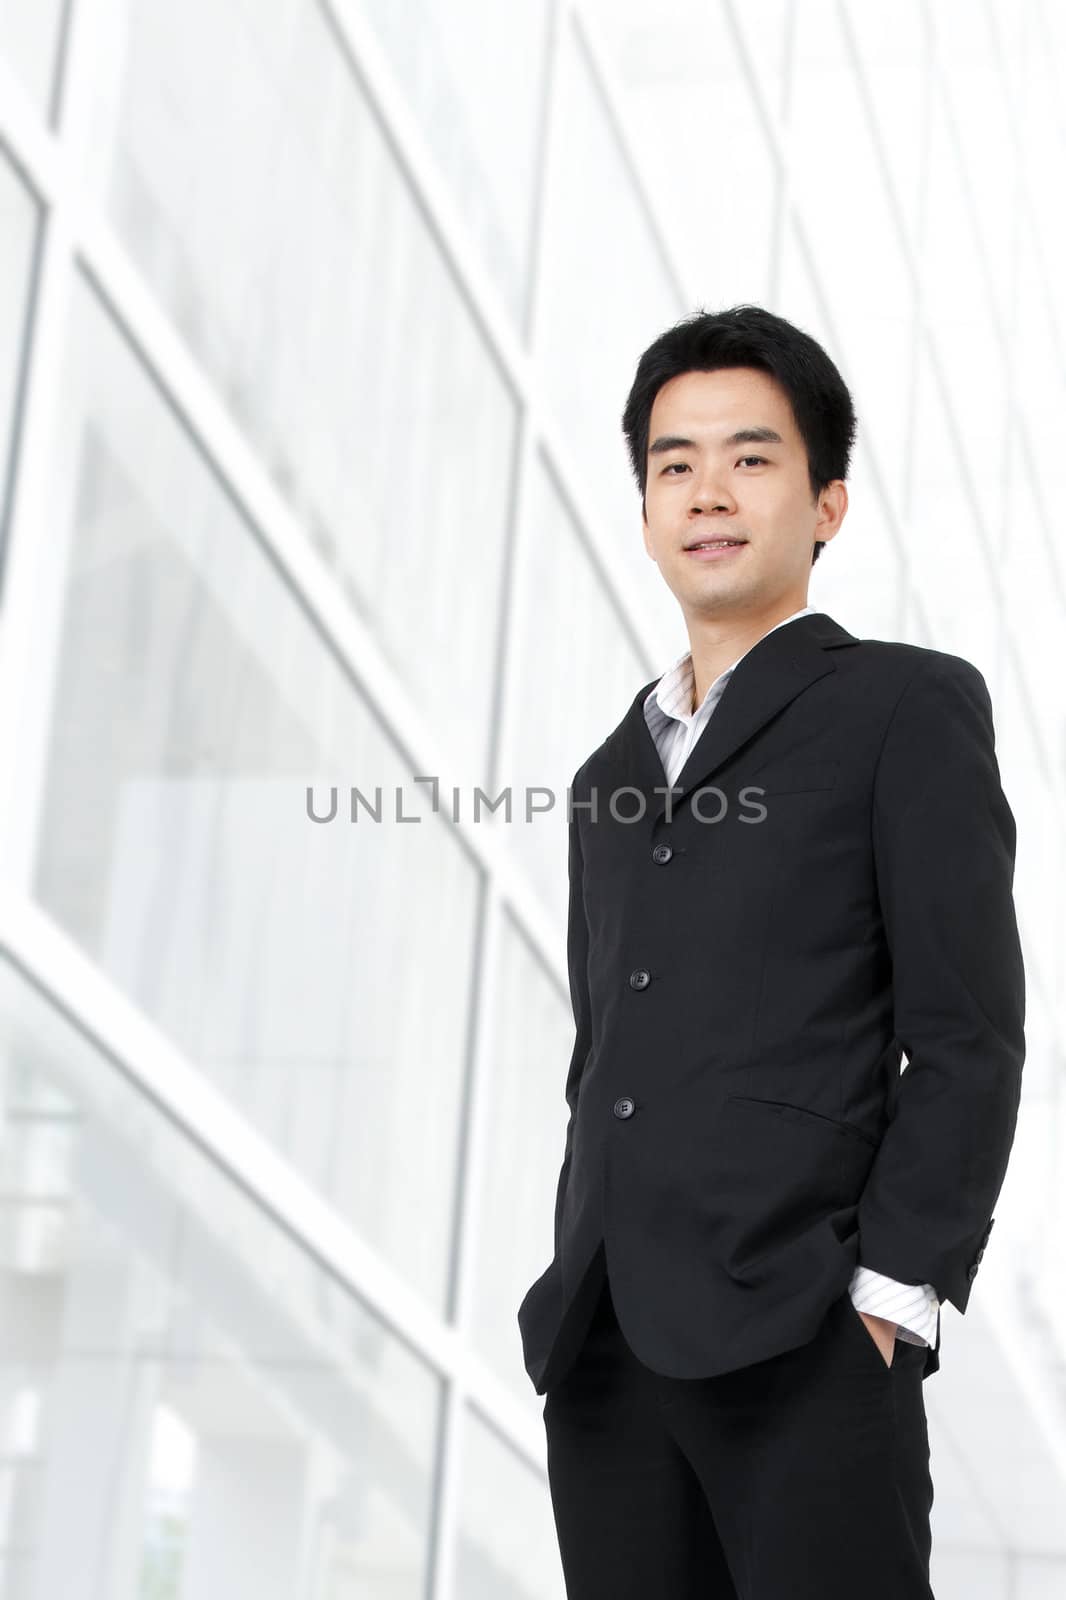 Young Asian executive by szefei